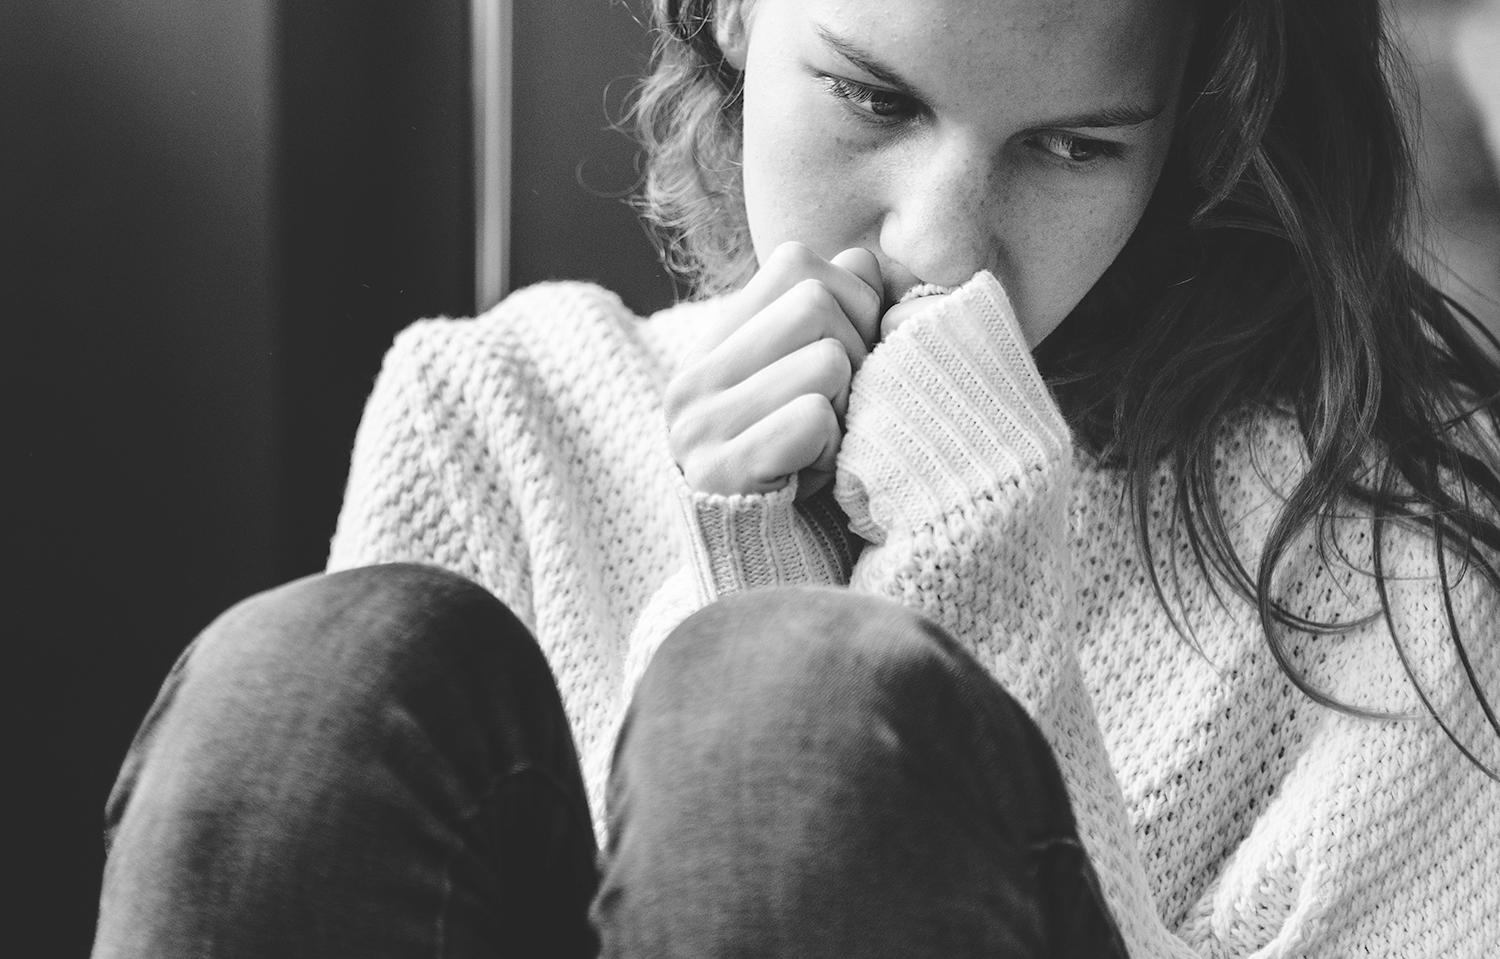 Depression in adolescents II: self-harm